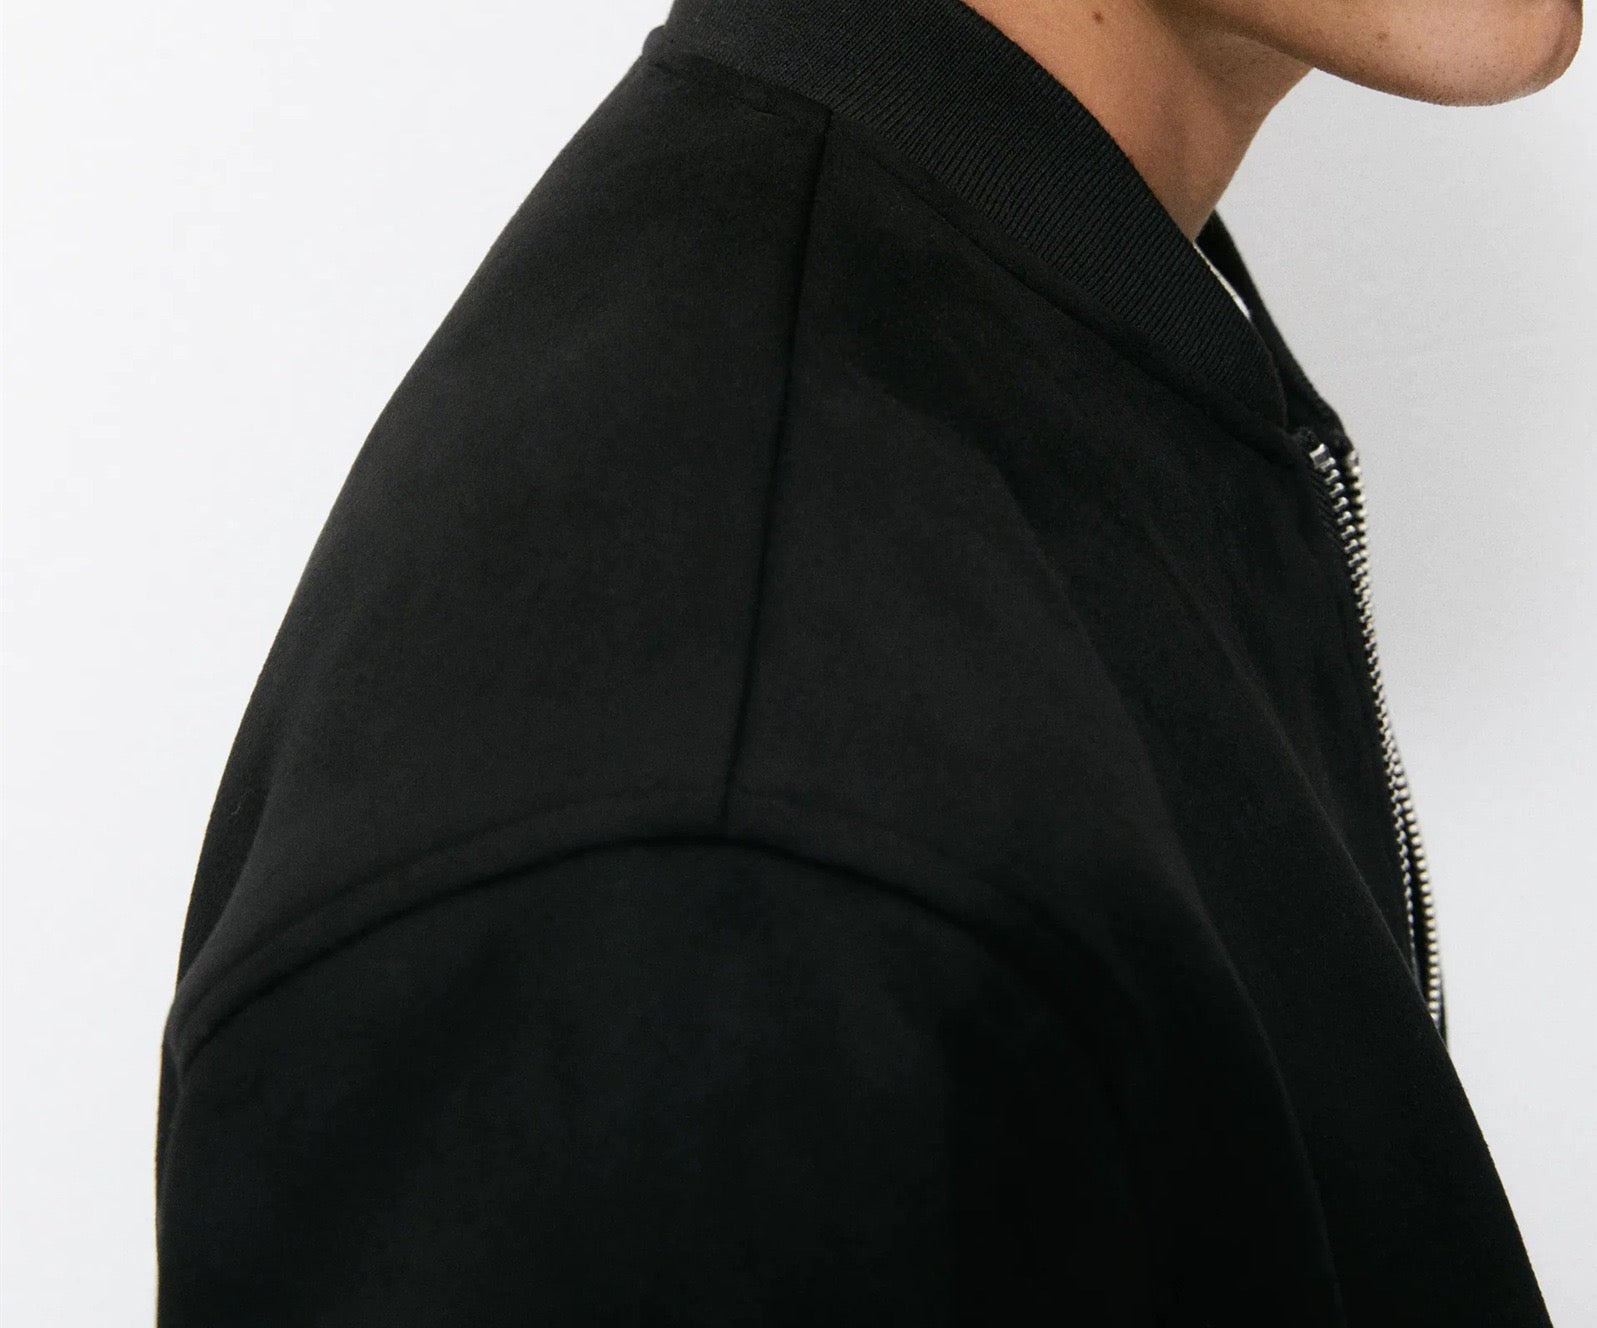 Heqv - Black Long Sleeve Sweatshirt for Men - Sarman Fashion - Wholesale Clothing Fashion Brand for Men from Canada